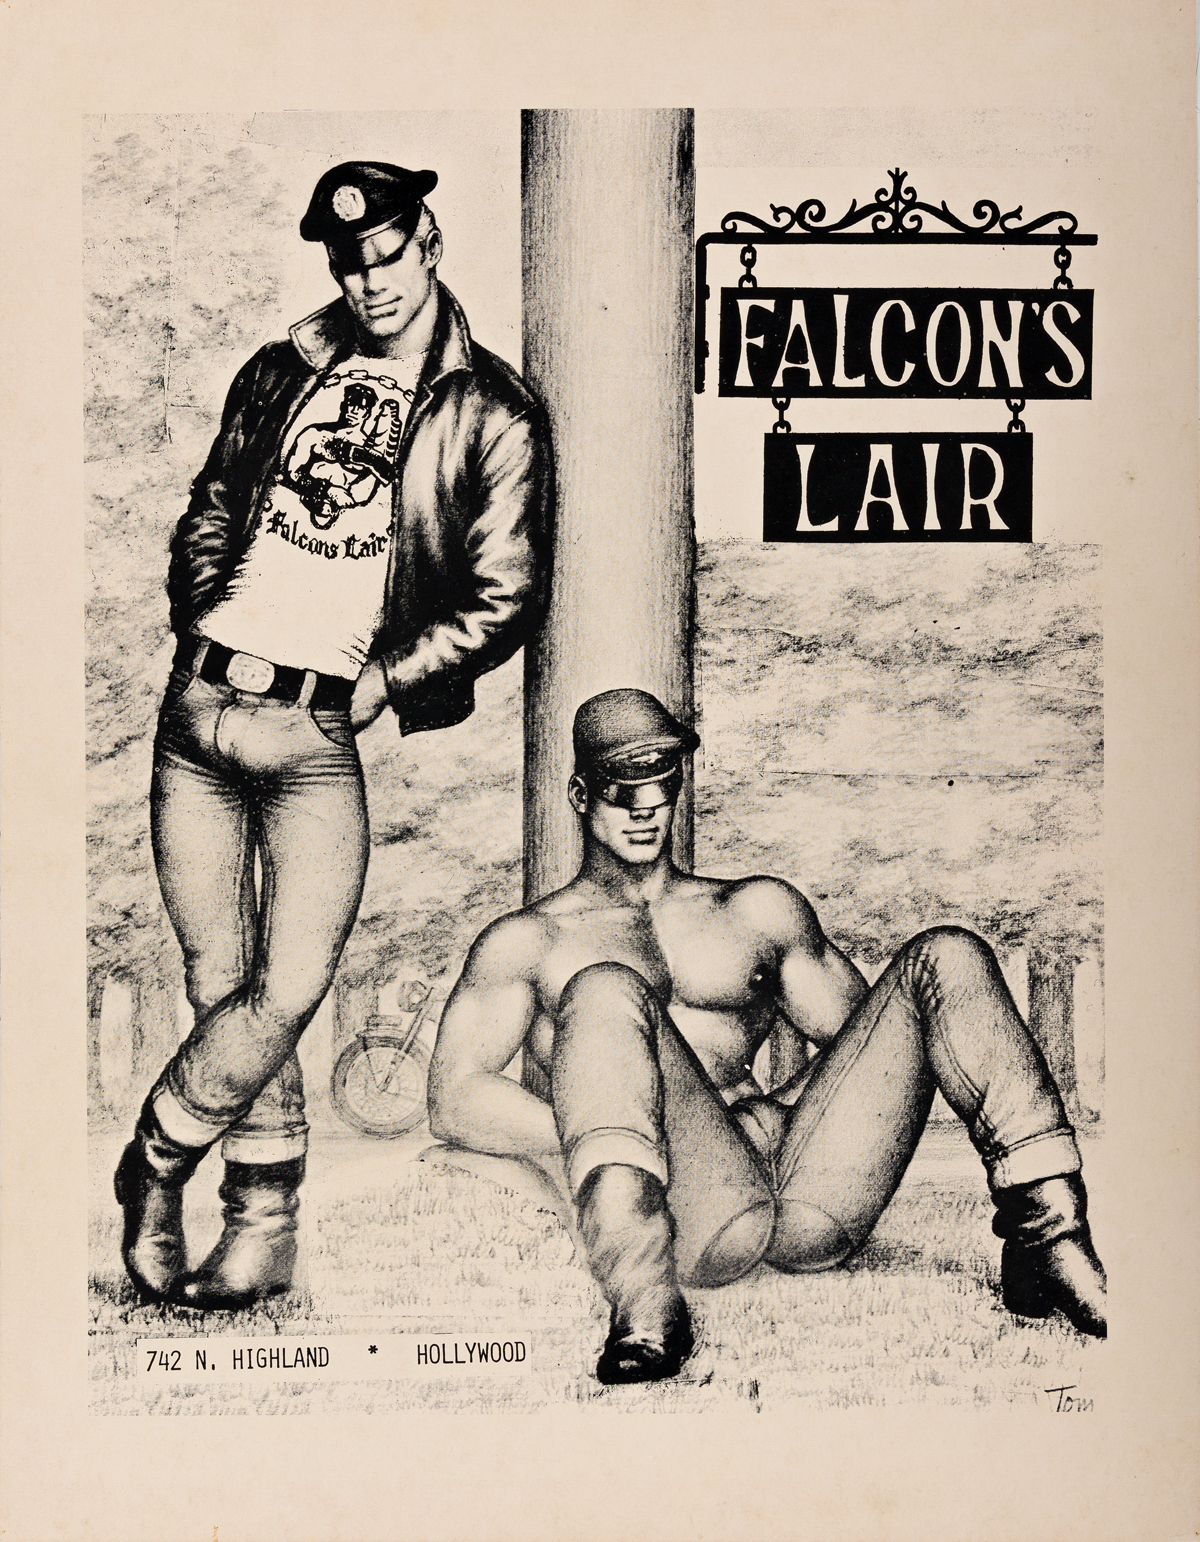 TOM OF FINLAND (TOUKO VALIO LAAKSONEN, 1920-1991) Falcons Lair.